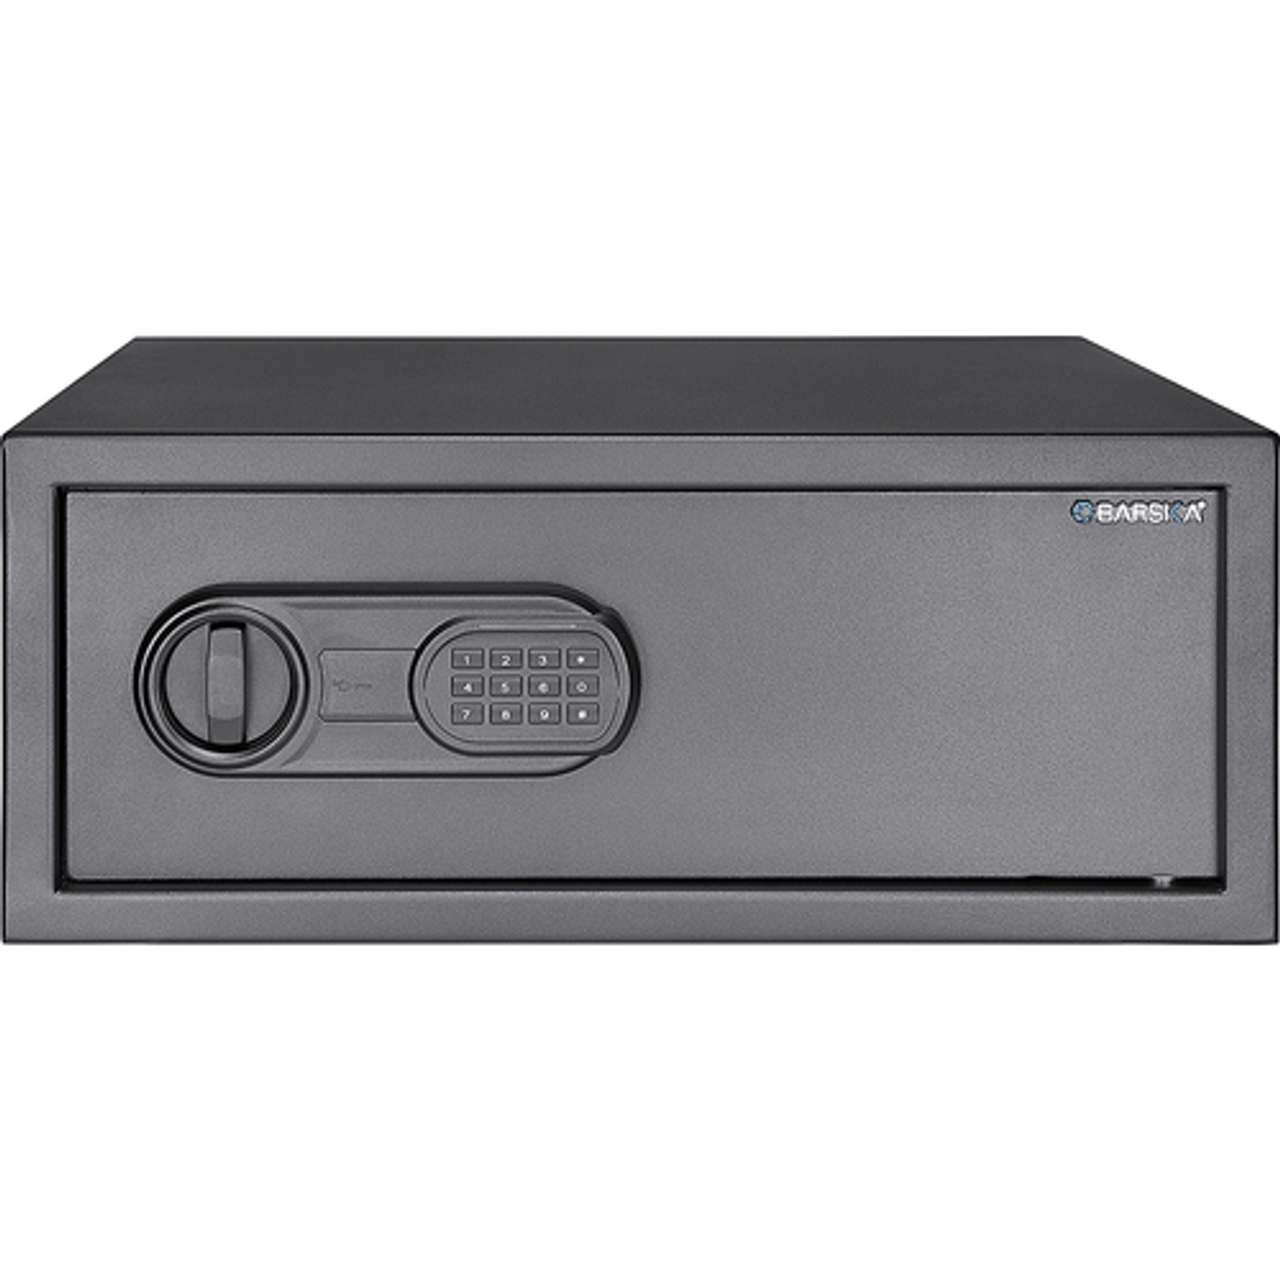 Barska - WL120 WardenLight LED Digital Keypad Security Safe - Black